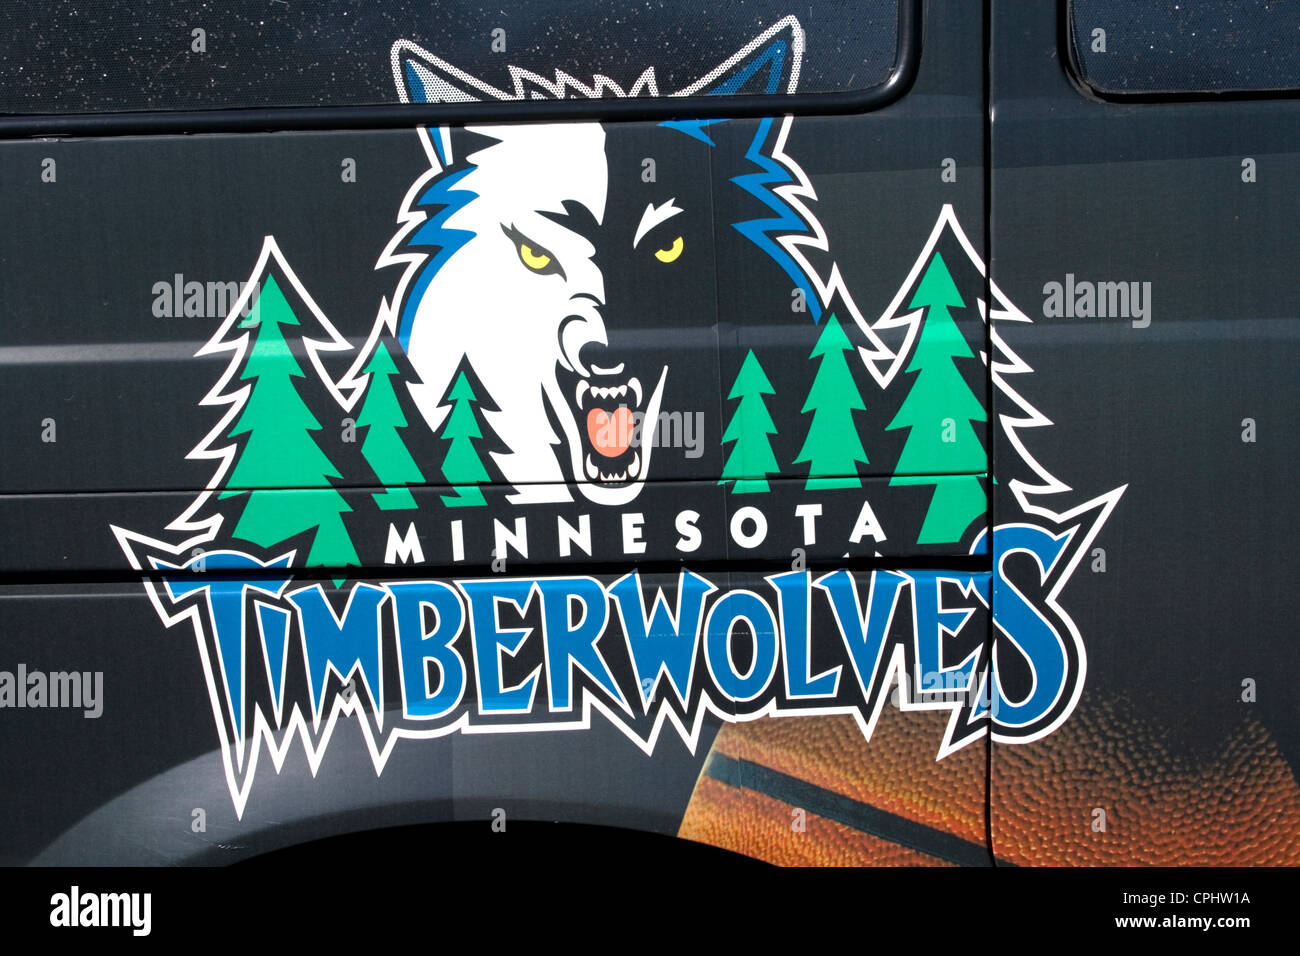 Professional NBA basketball team Minnesota Timberwolves logo on side of  team van. Minneapolis Minnesota MN USA Stock Photo - Alamy